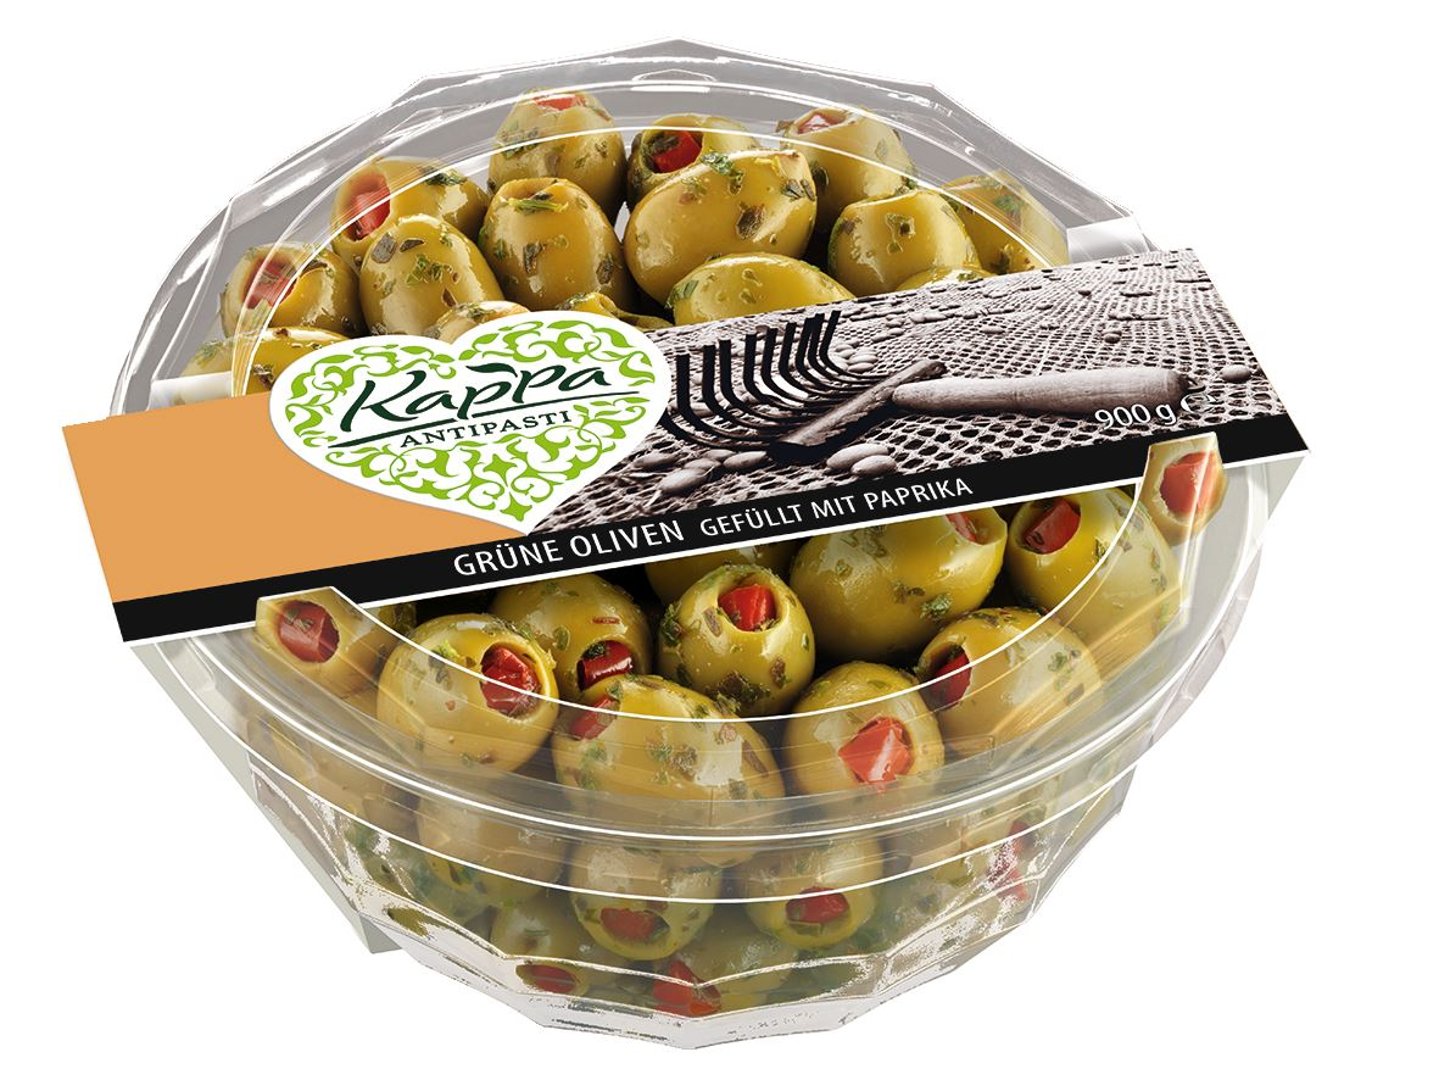 Kappa Oliven Grün gefüllt mit Paprika gekühlt - 650 g Packung